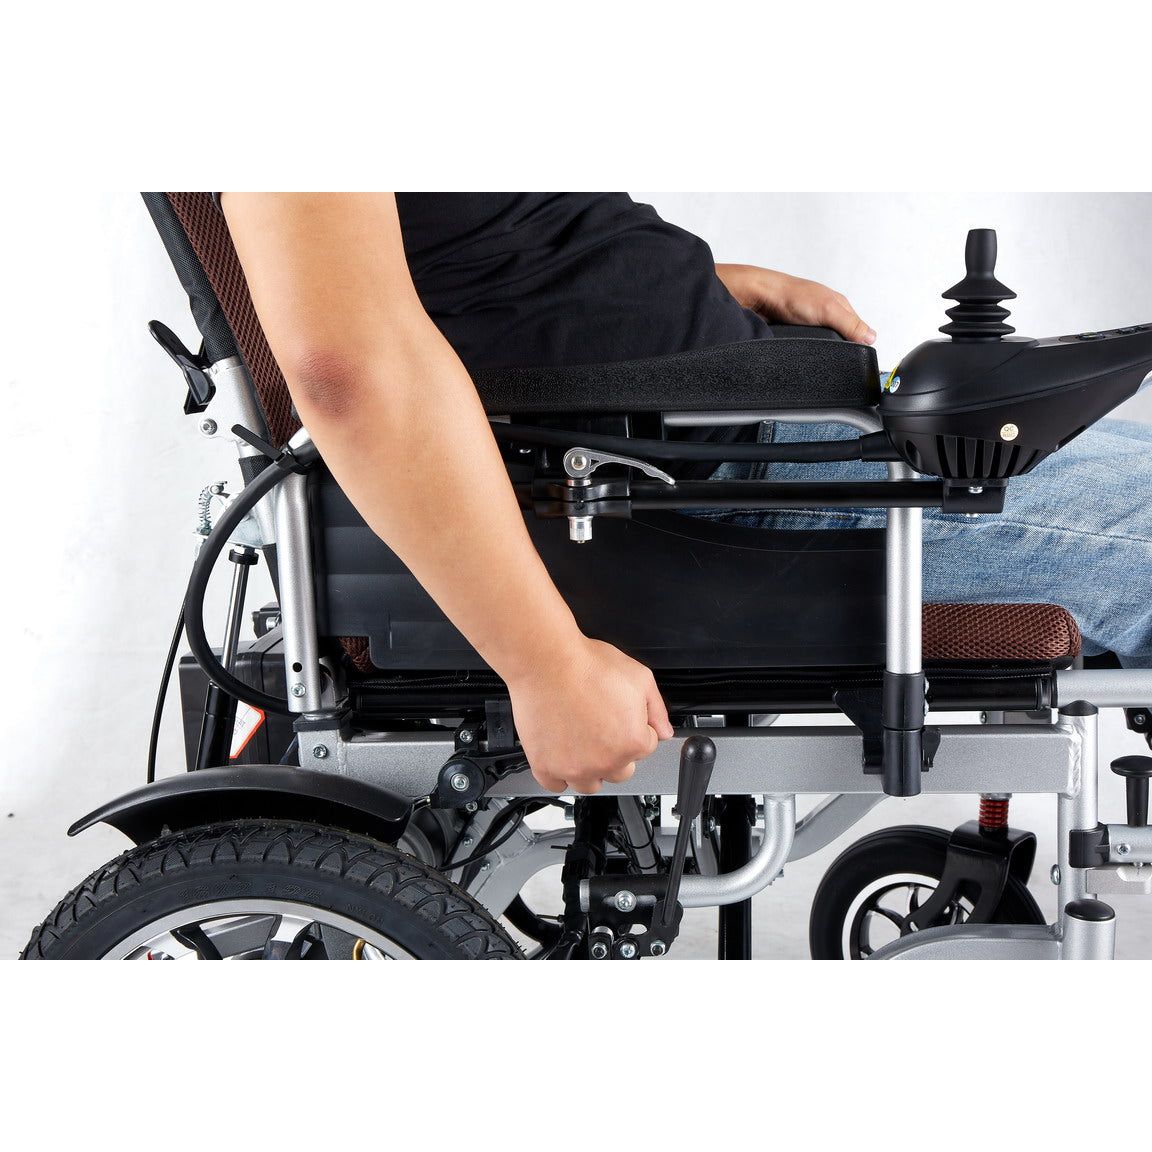 High Back Reclining Wheelchair